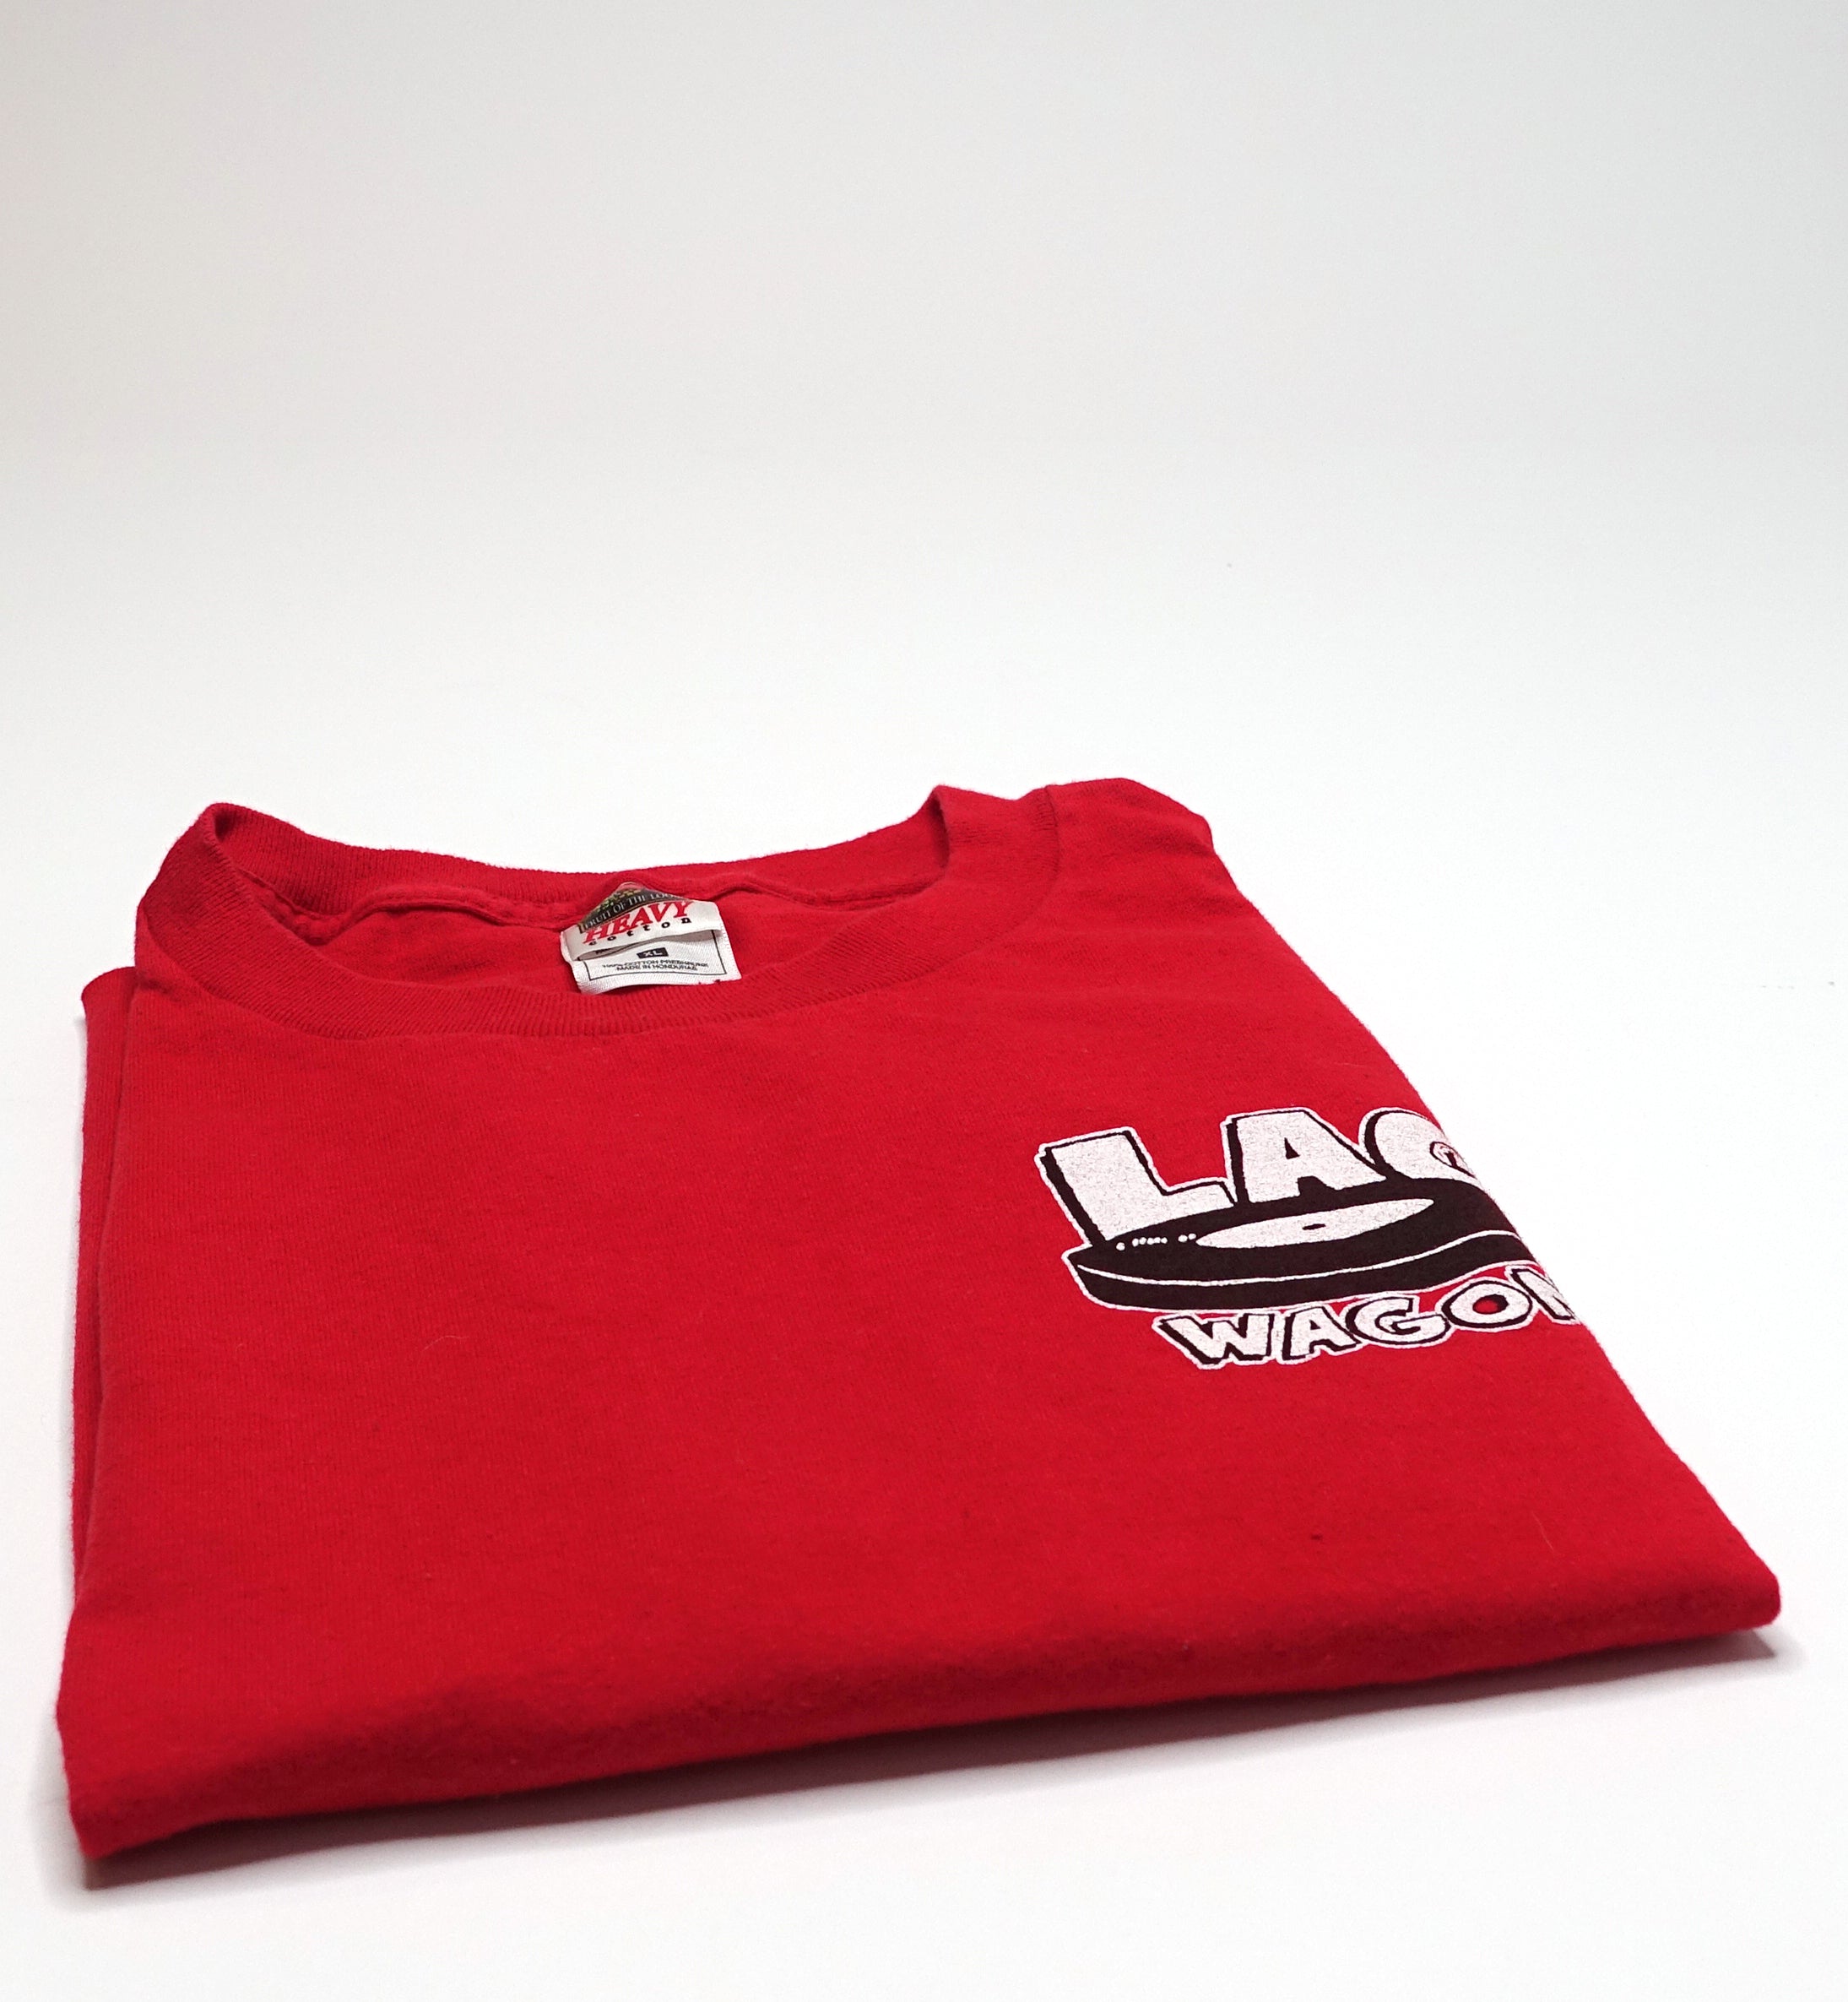 Lagwagon - Fat Wreck Chords Logo 90's Tour Shirt Size XL